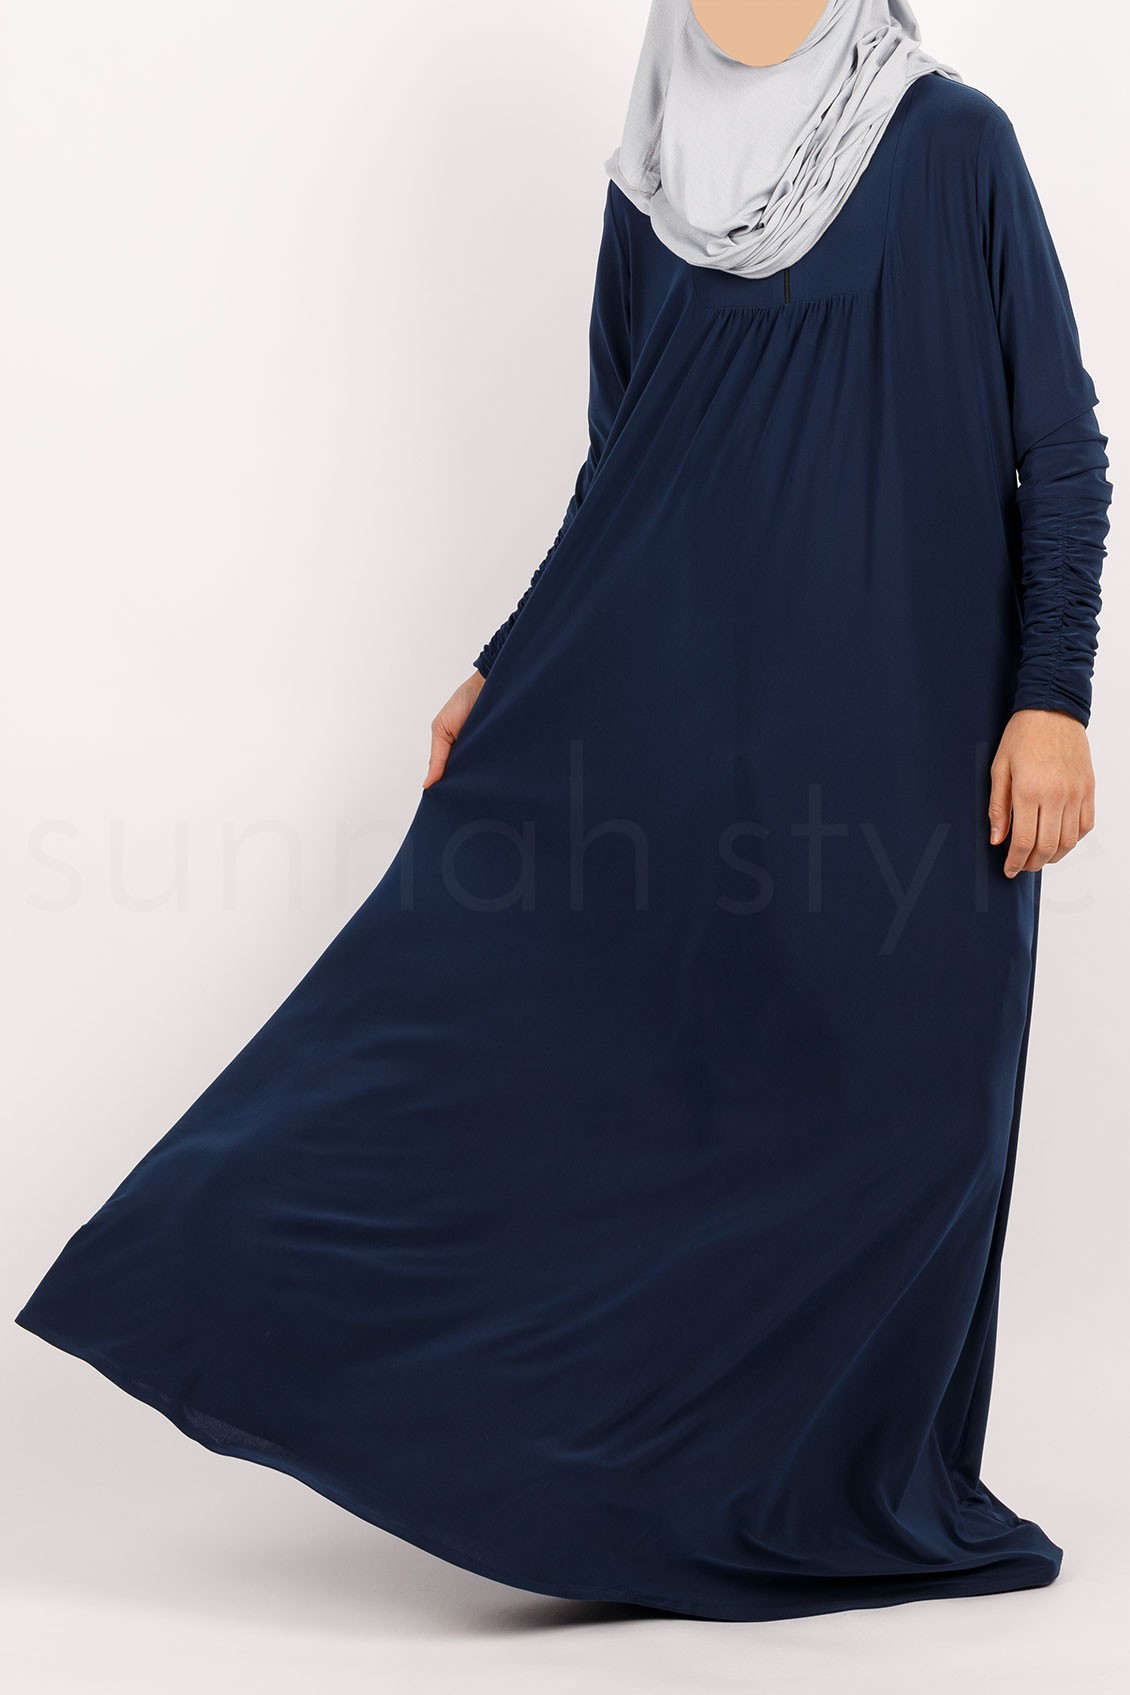 Sunnah Style Girls Flourish Jersey Abaya Navy Blue